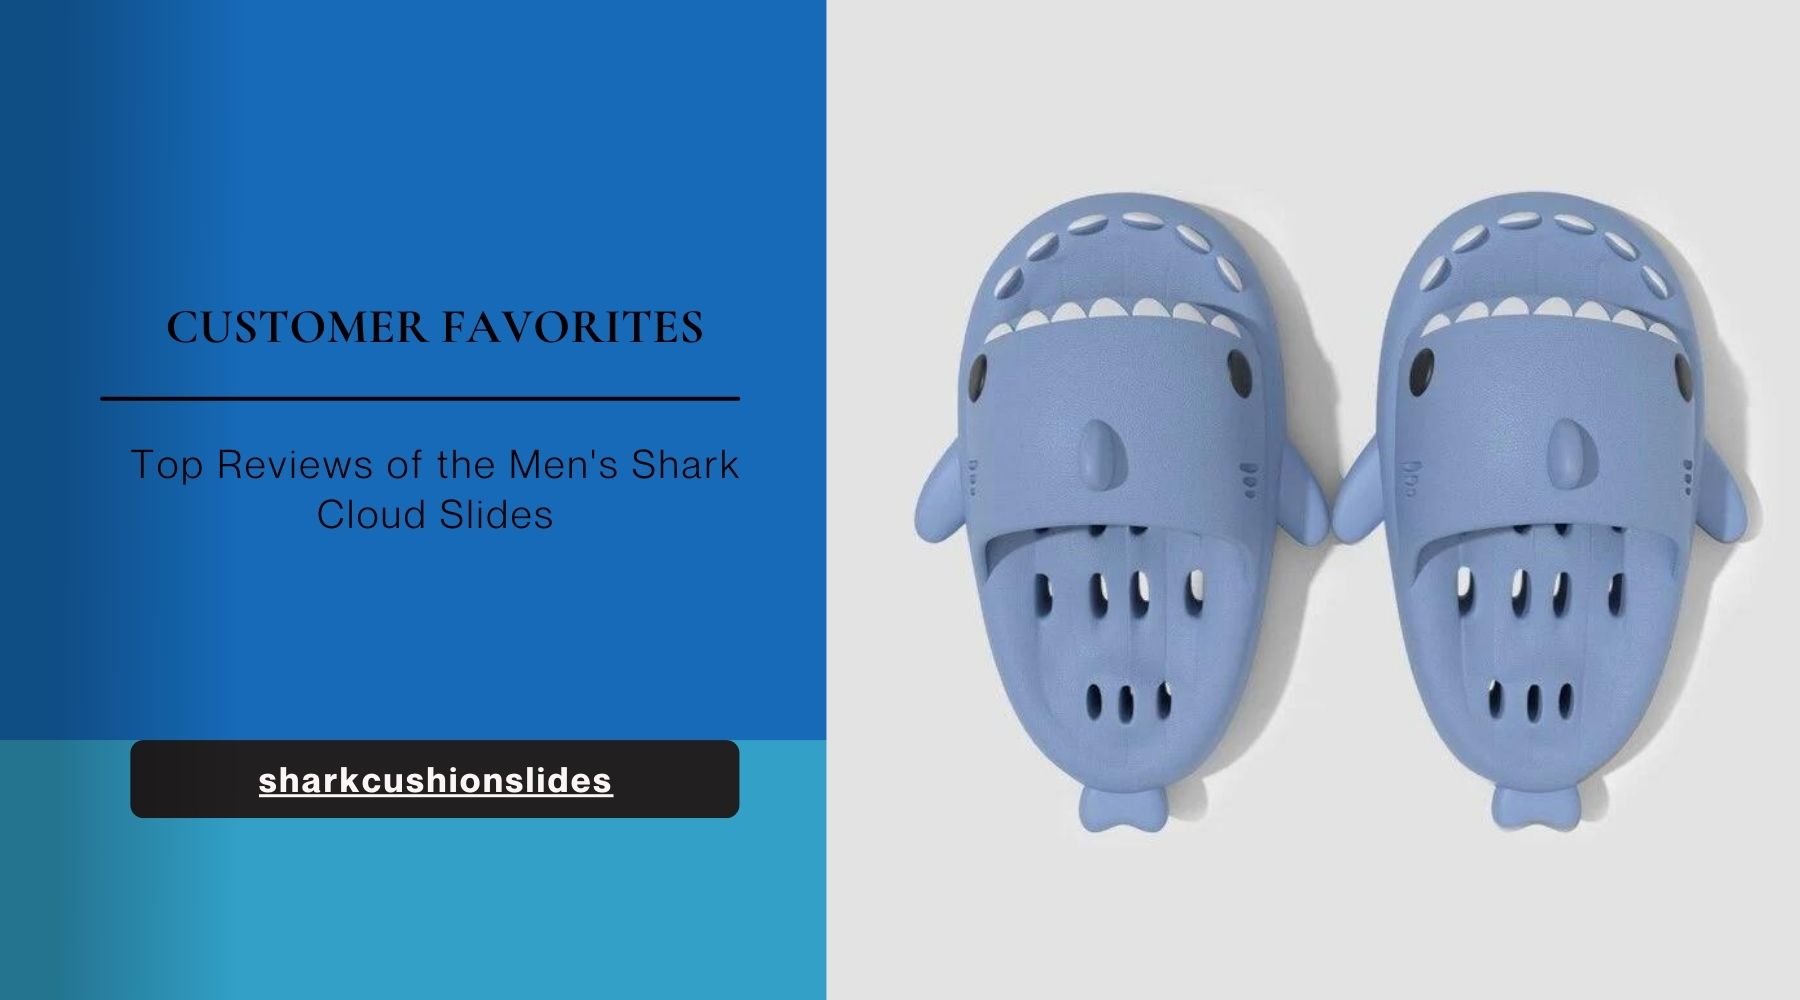 Customer Favorites: Top Reviews of the Men's Shark Cloud Slides